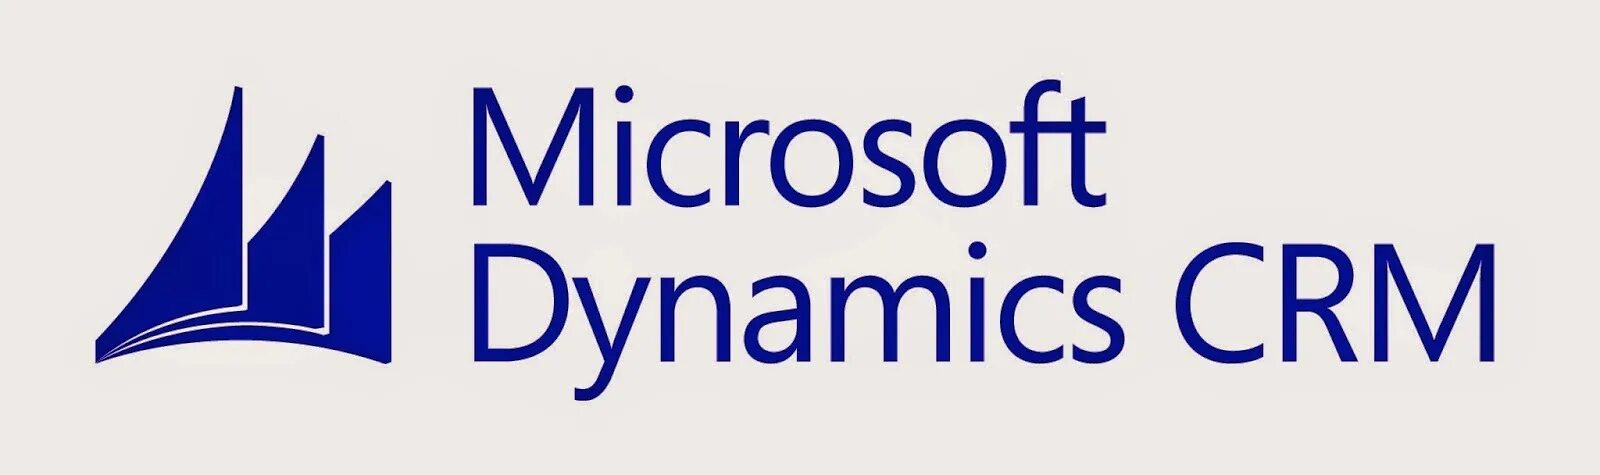 Dynamics nav. Microsoft Dynamics. Microsoft Dynamics CRM. Microsoft Dynamics logo. Microsoft Dynamics CRM 2016.